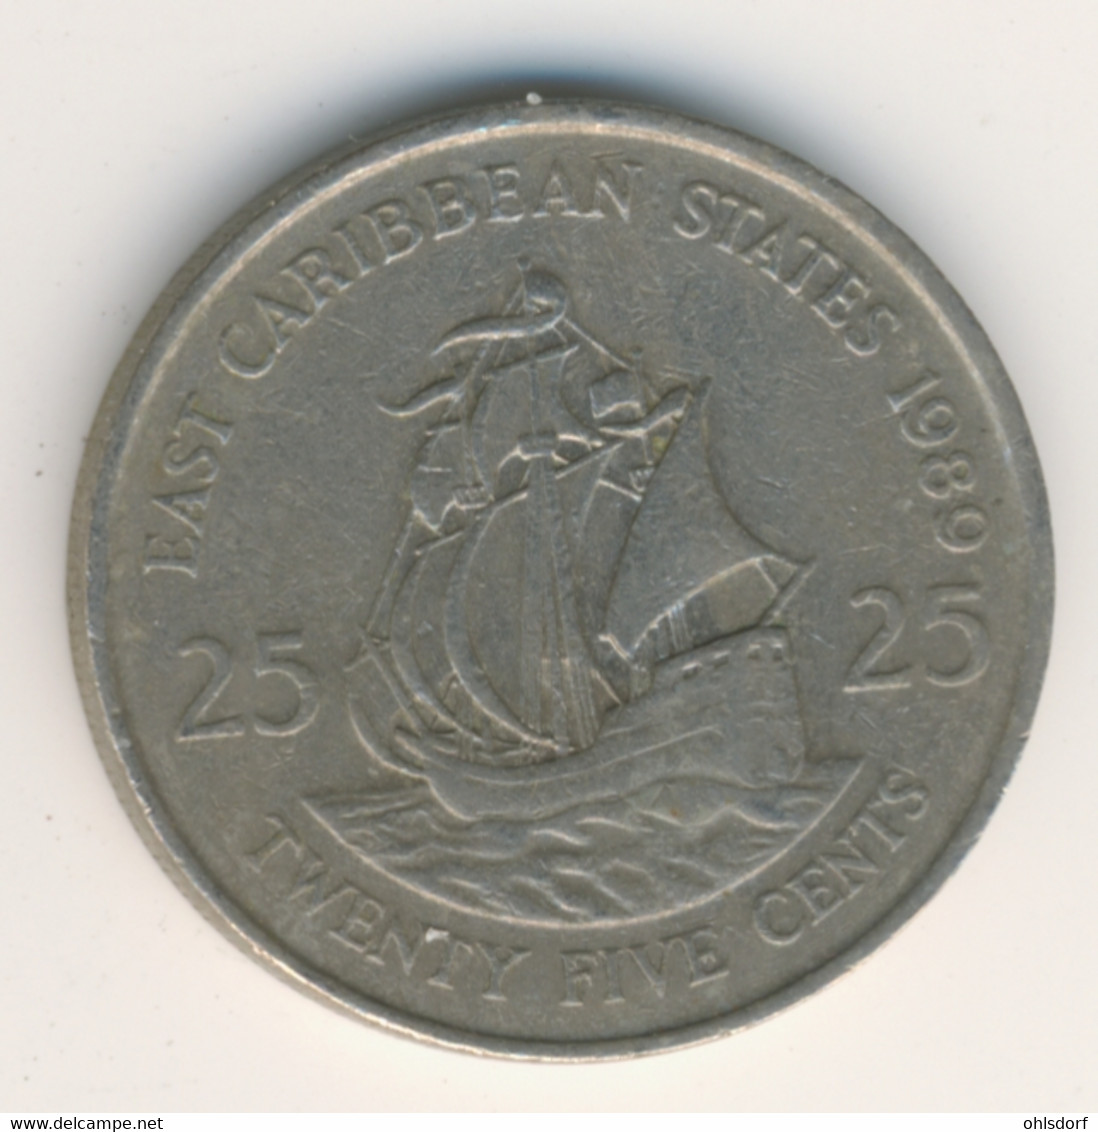 EAST CARIBBEAN STATES 1989: 25 Cents, KM 14 - Caraibi Orientali (Stati Dei)